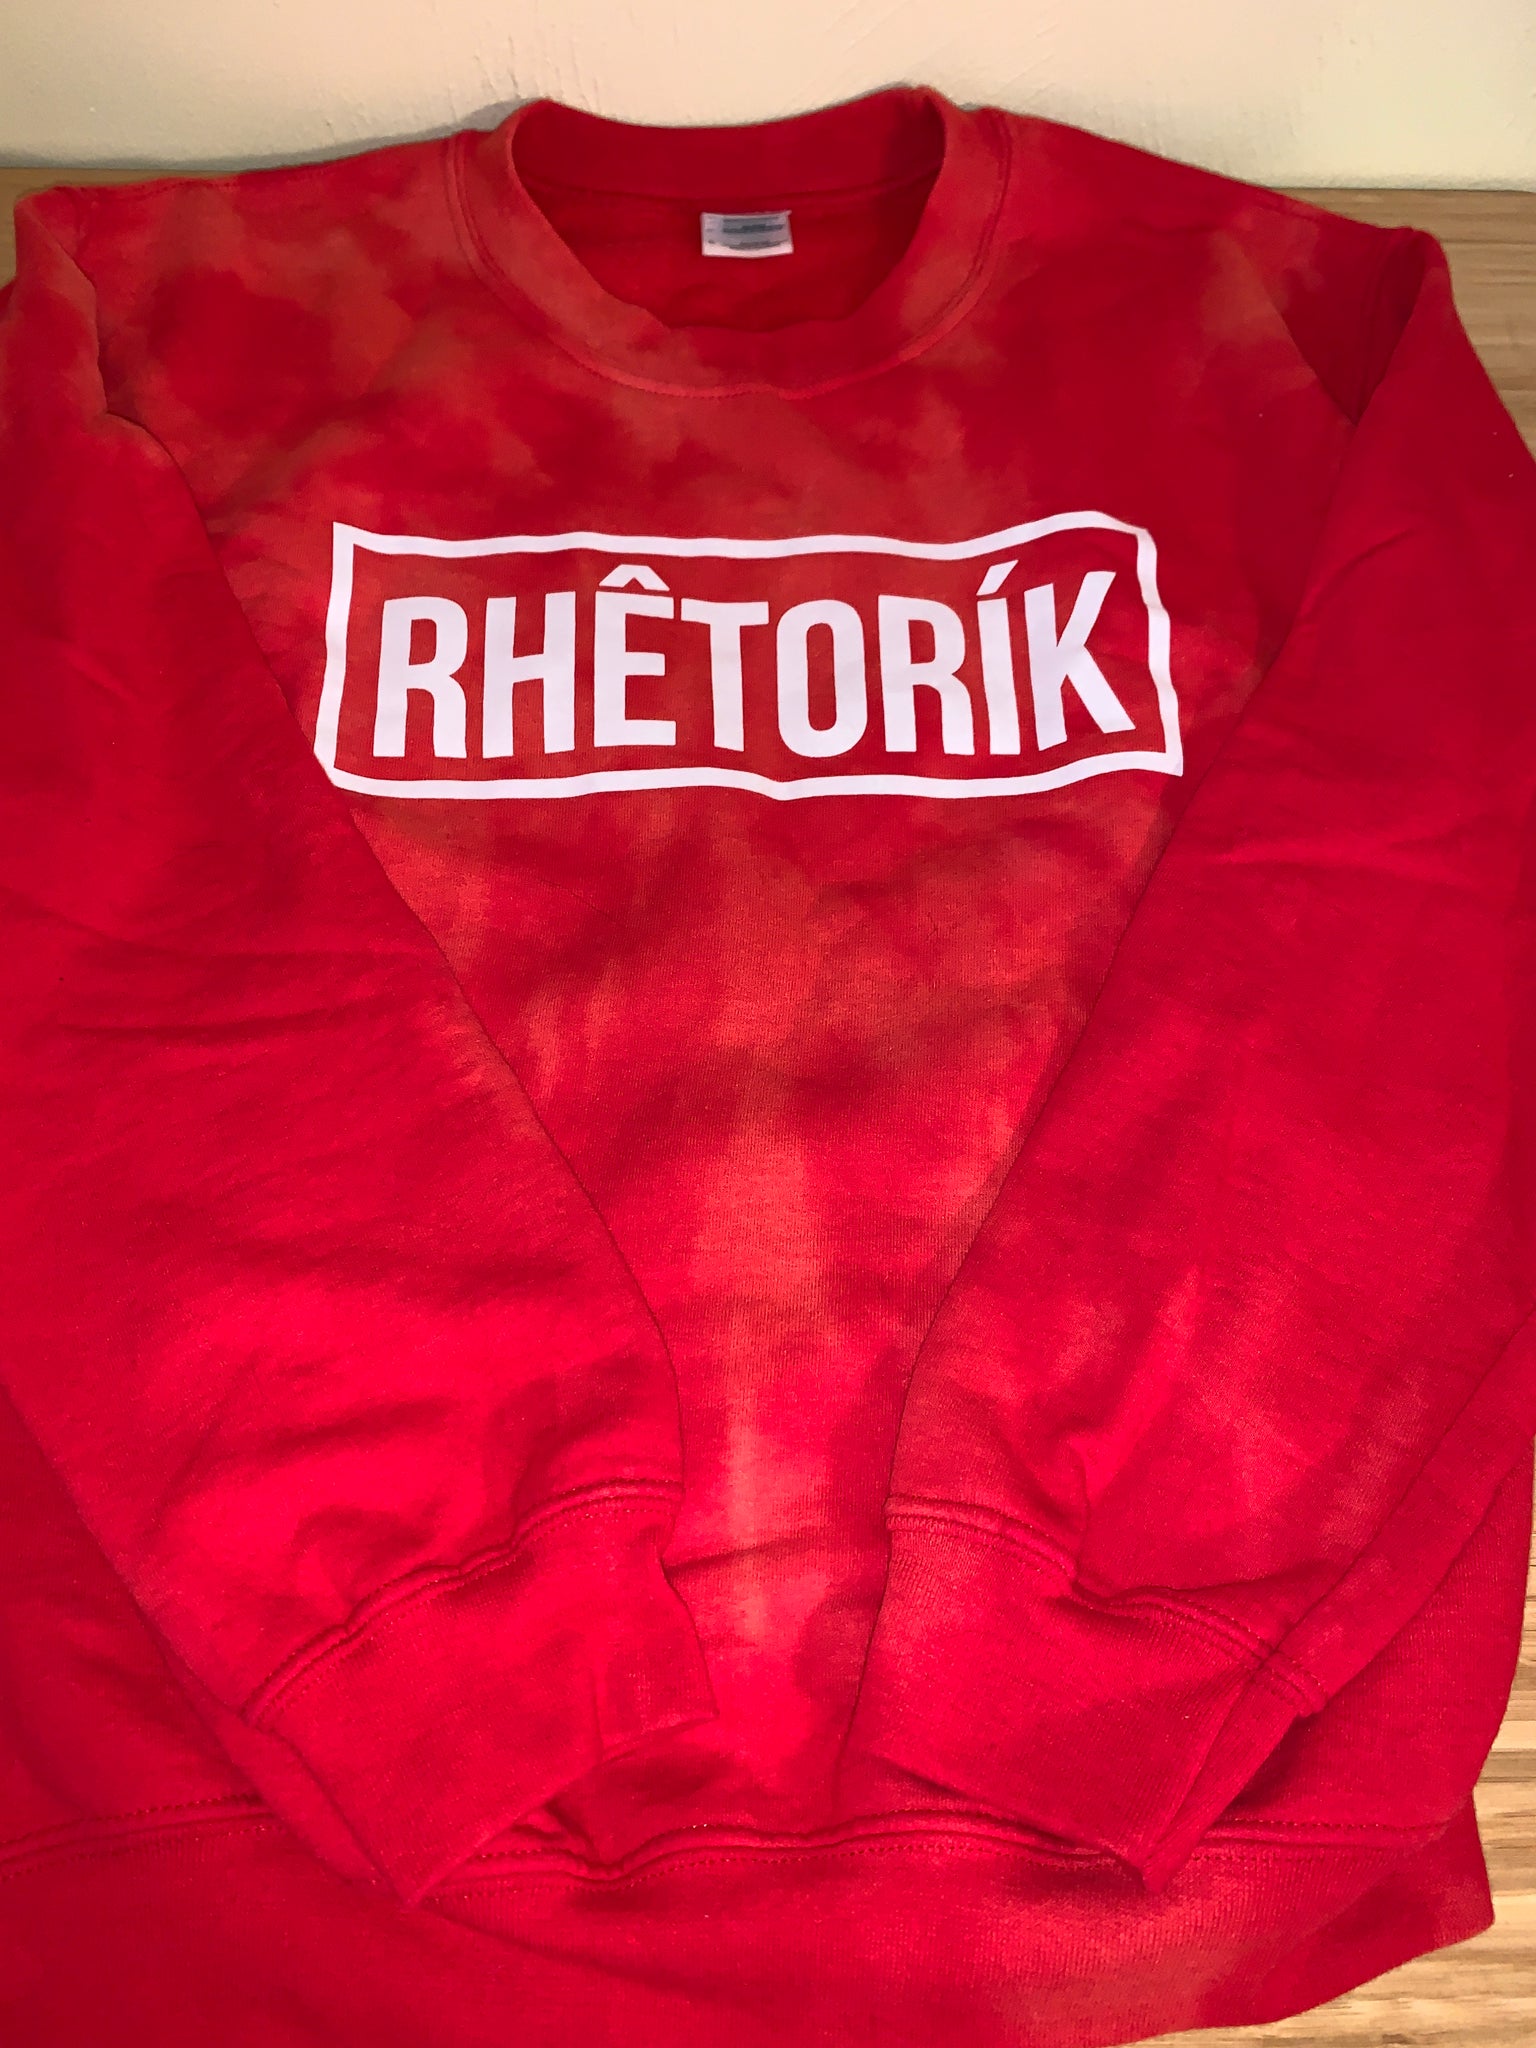 RHETORIK Red Tie-Die 1 of 1 Crew Neck Sweatshirt - ORIGINAL LOGO - Small